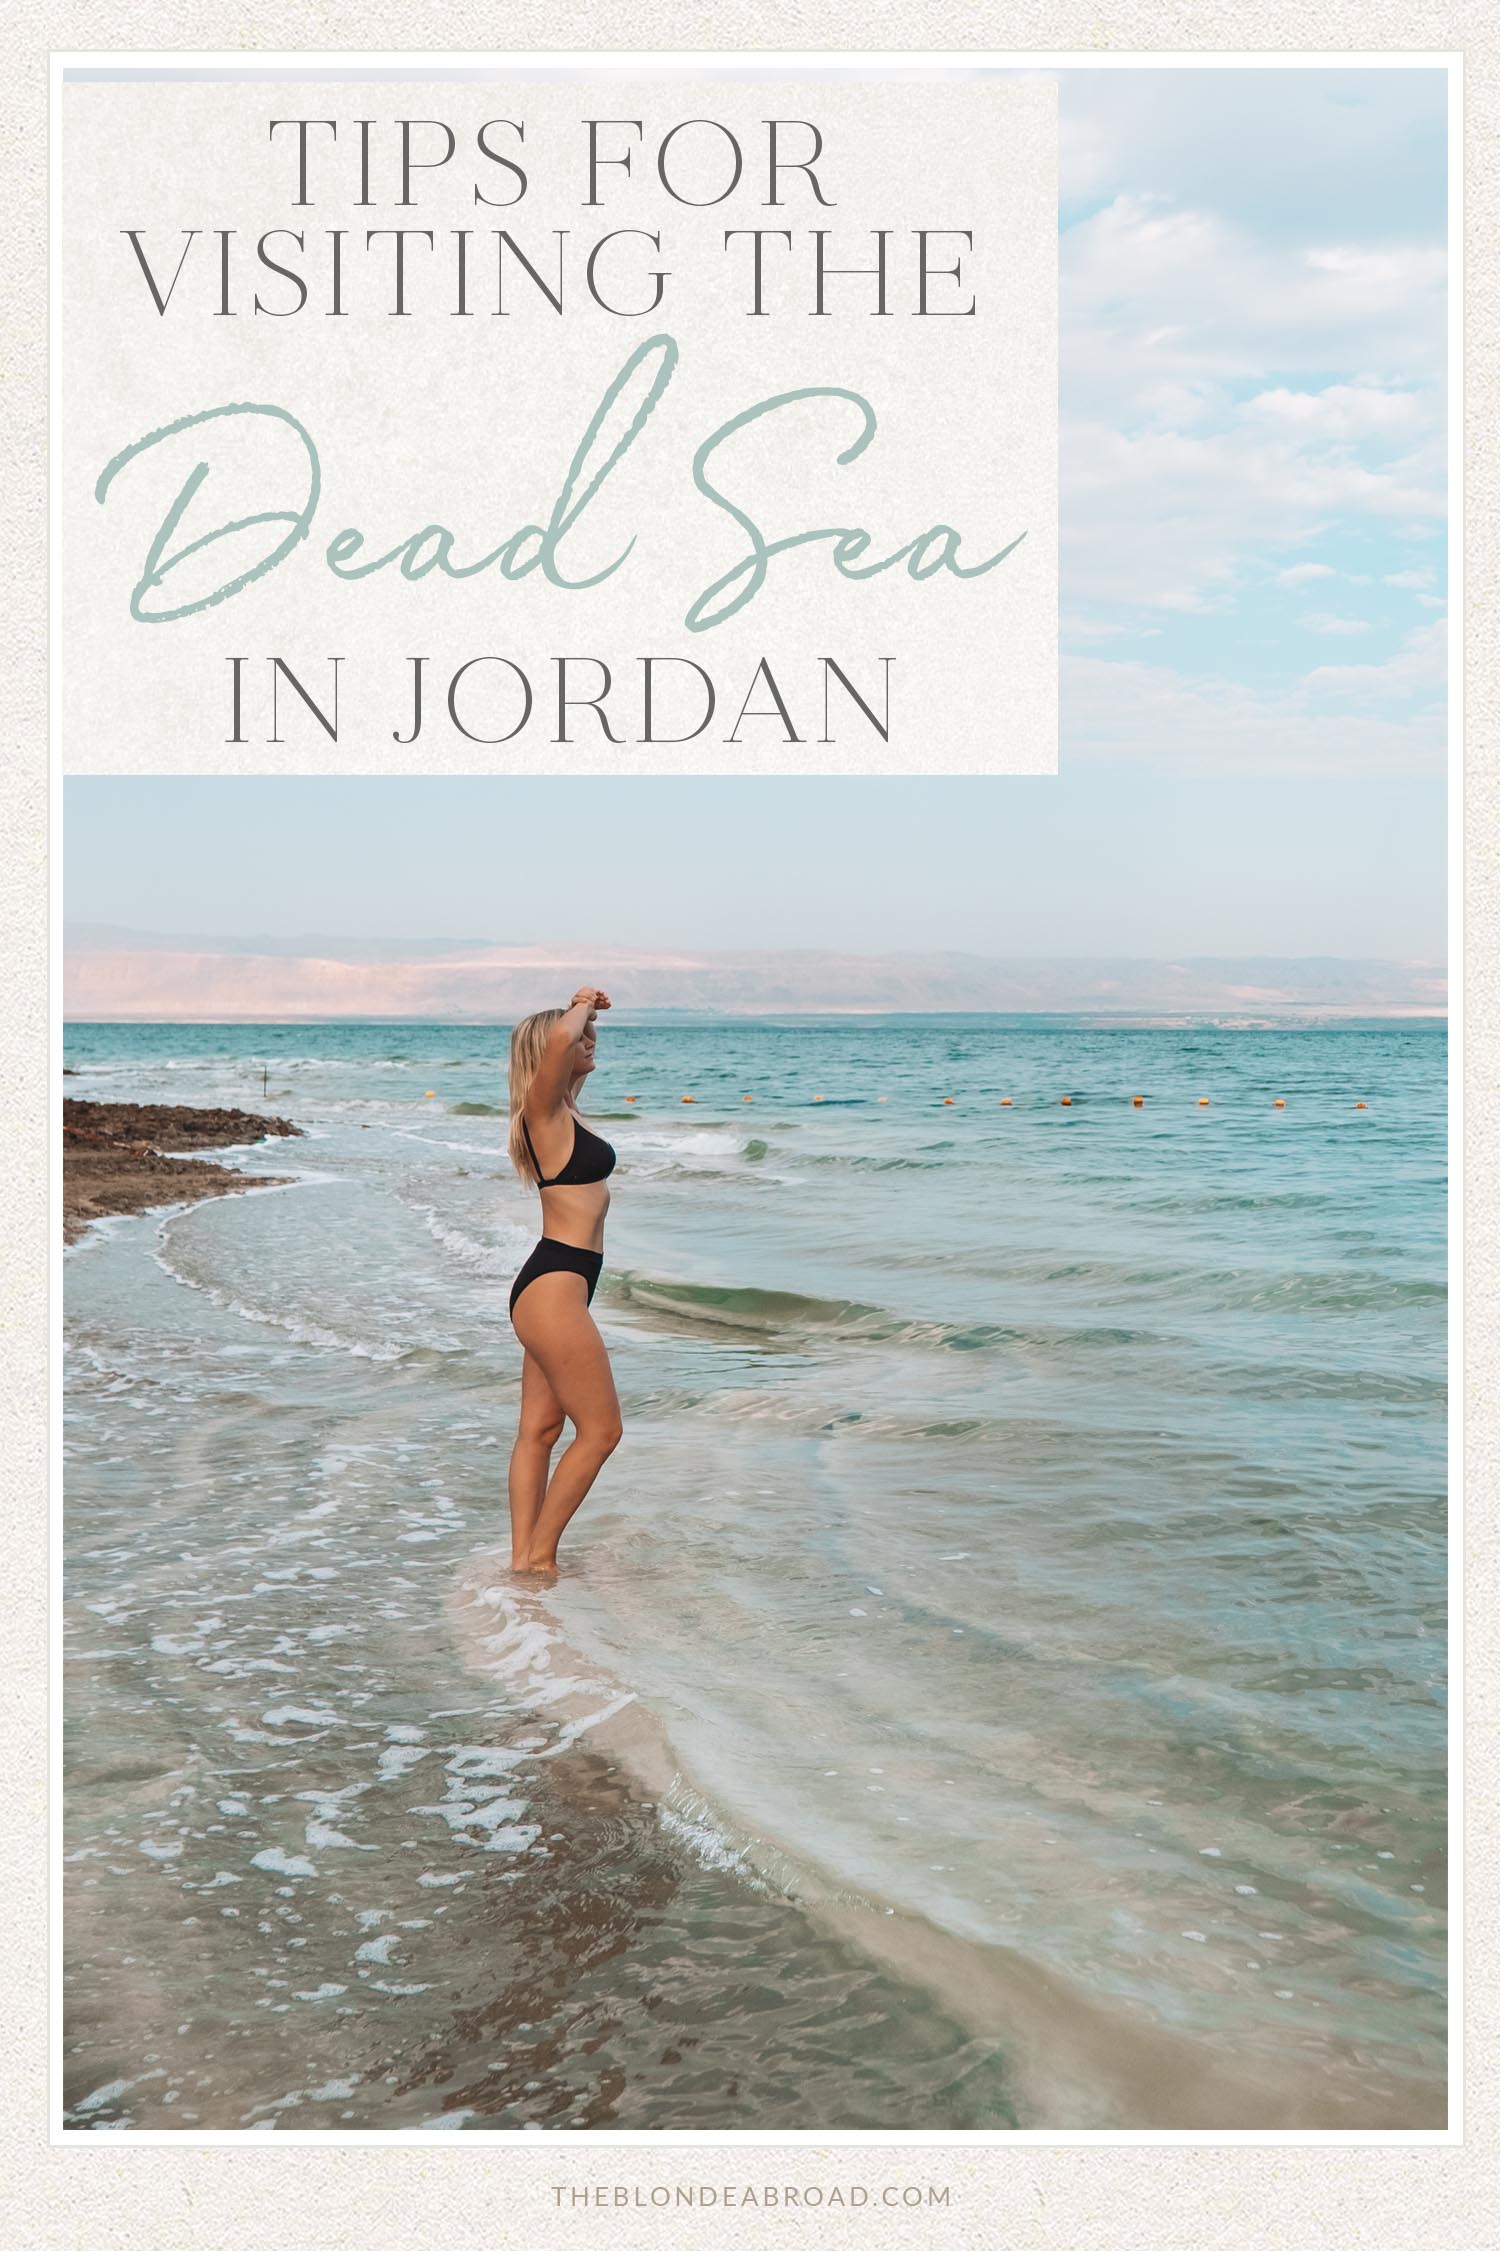 tips for visiting the dead sea in jordan